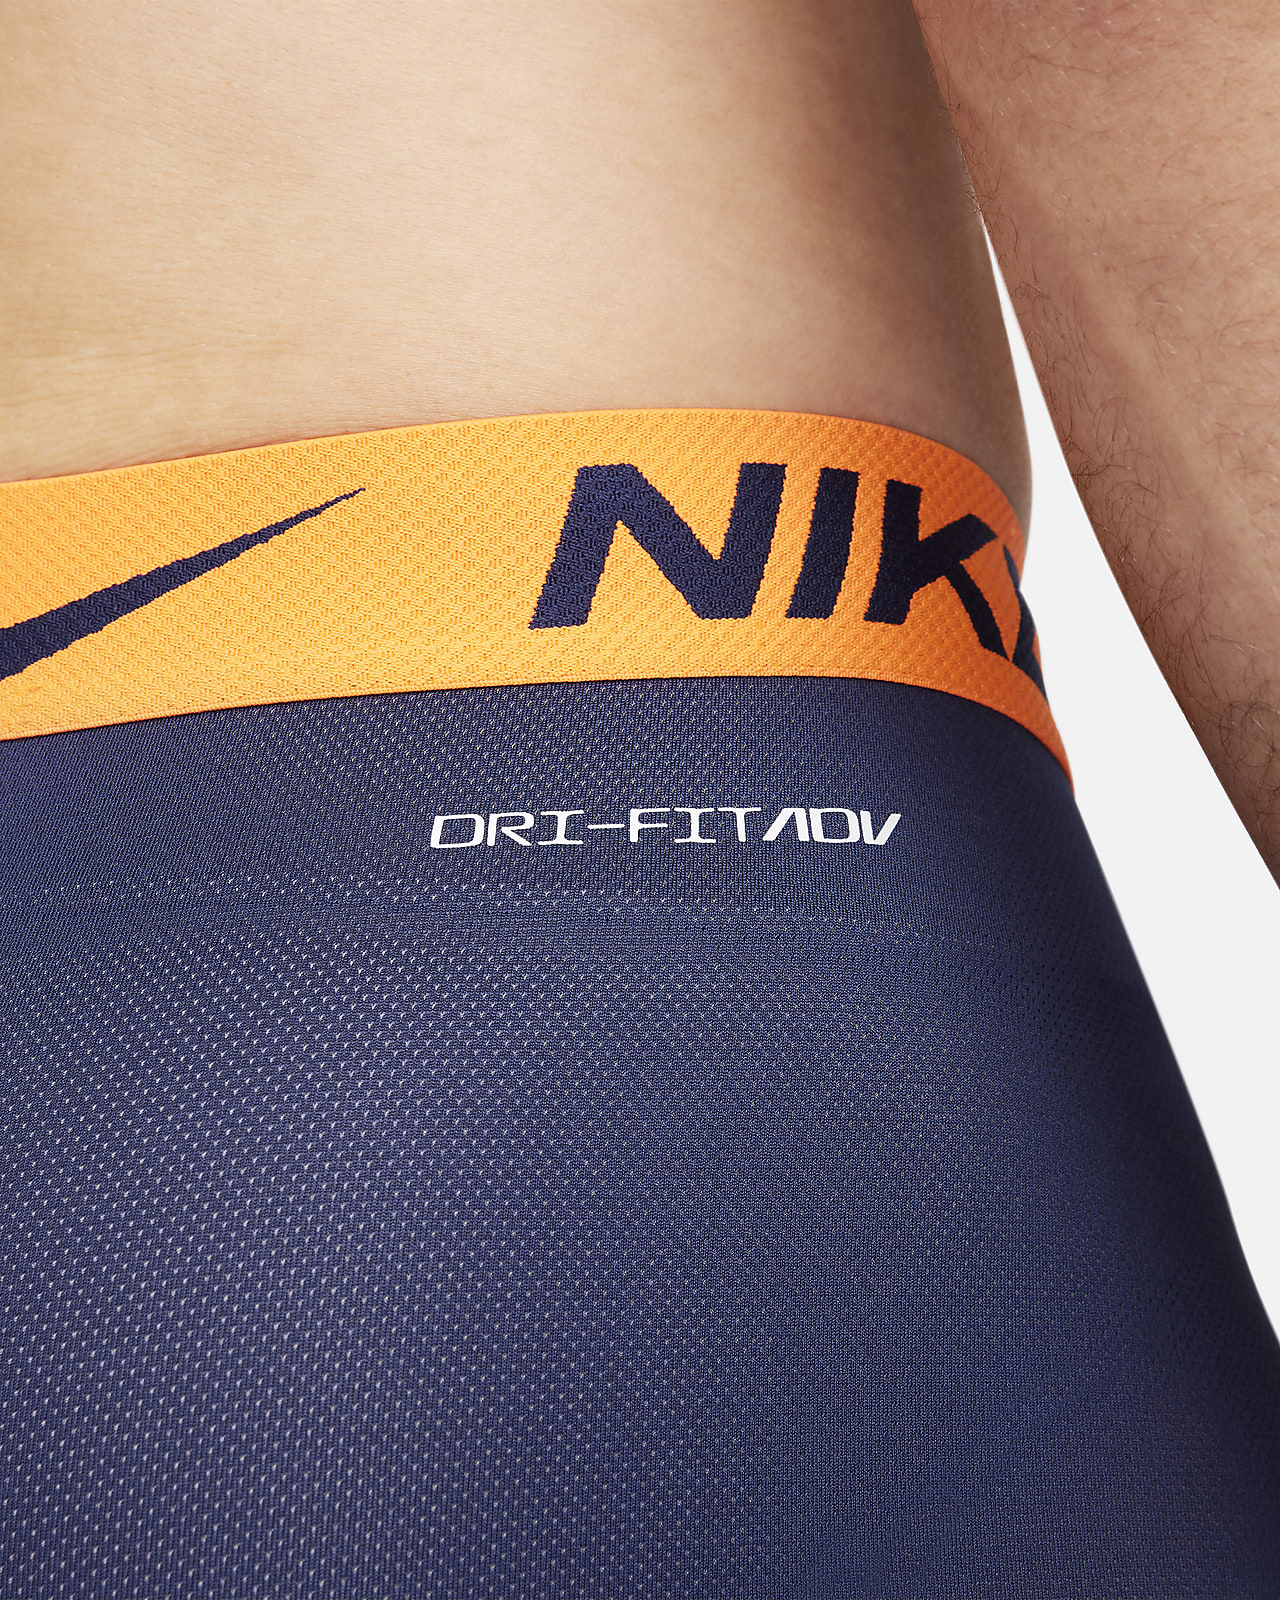 Nike Men's Boxer Brief 3-Pack - Orange/Purple